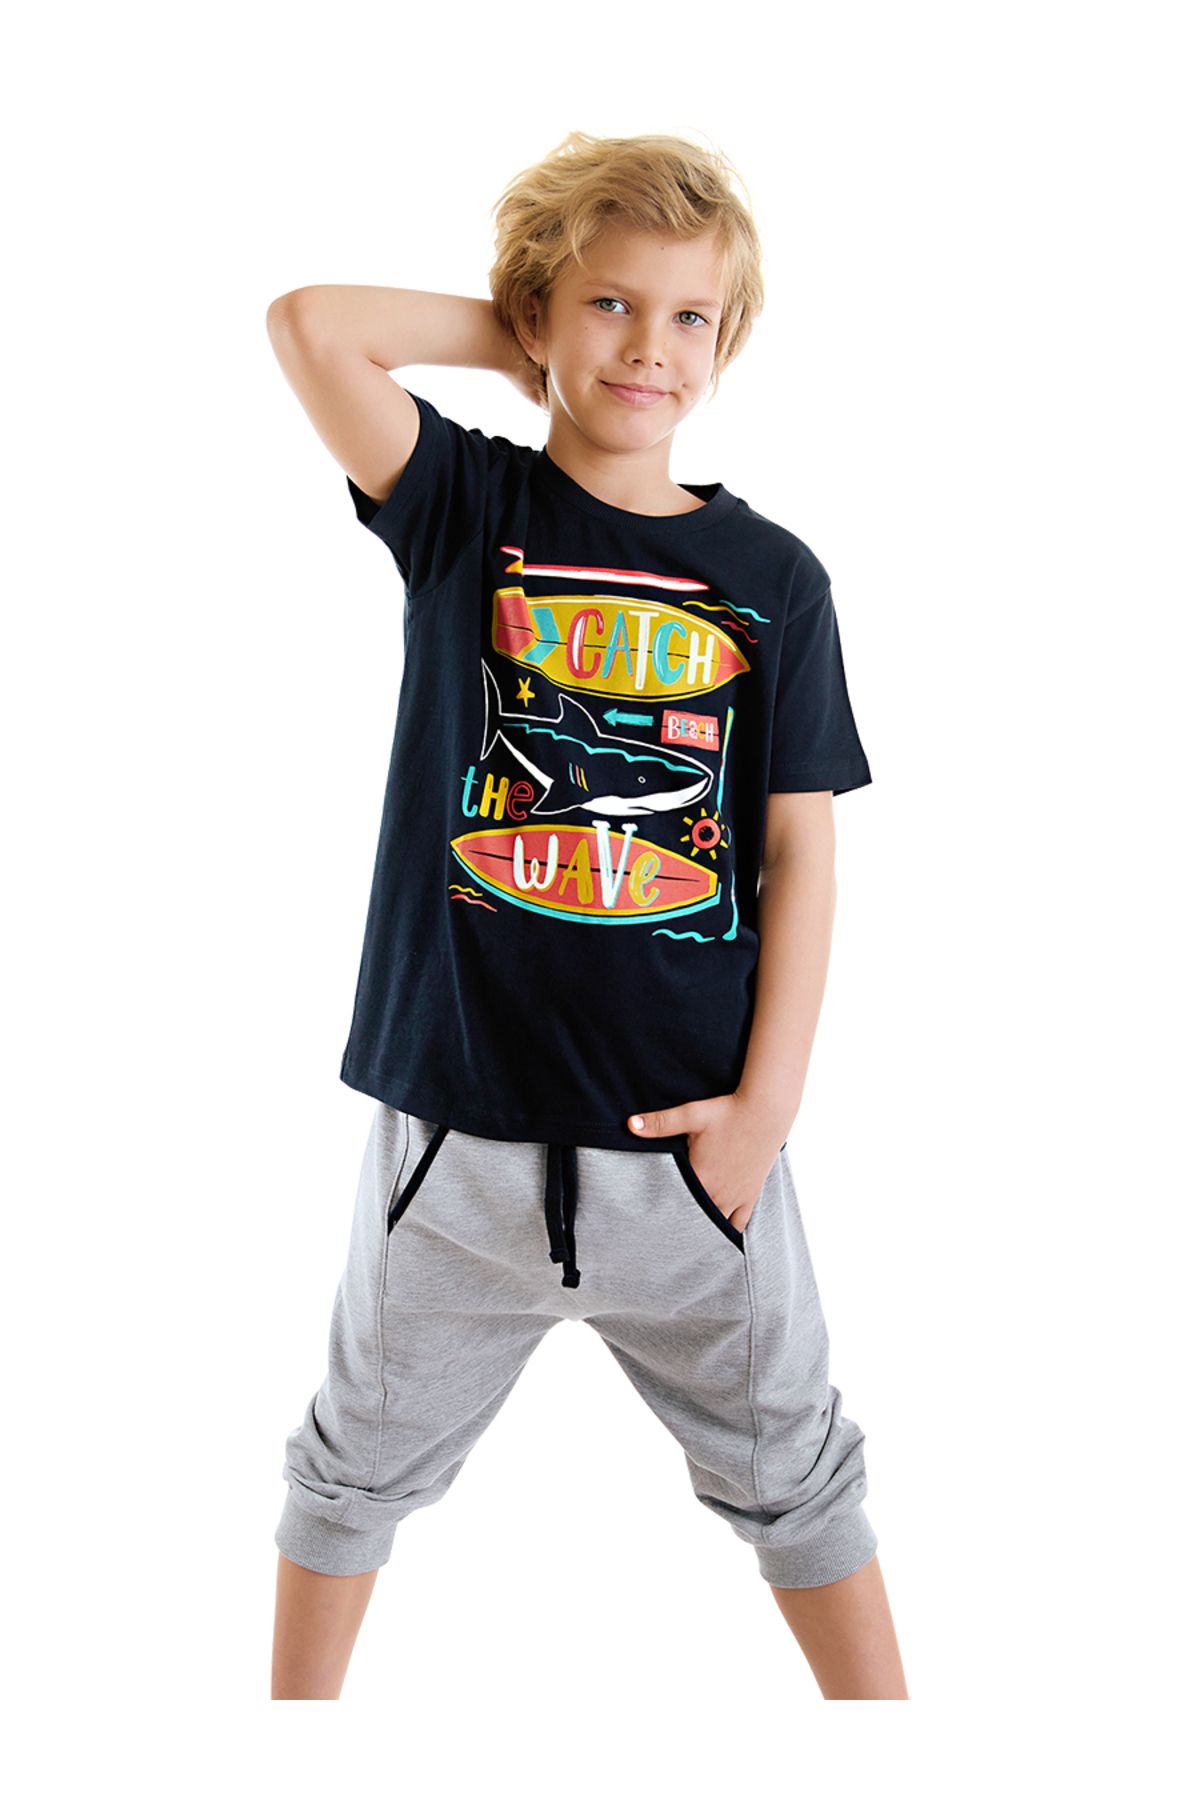 MSHB&G Catch Wave Erkek Çocuk T-shirt Kapri Şort Takım